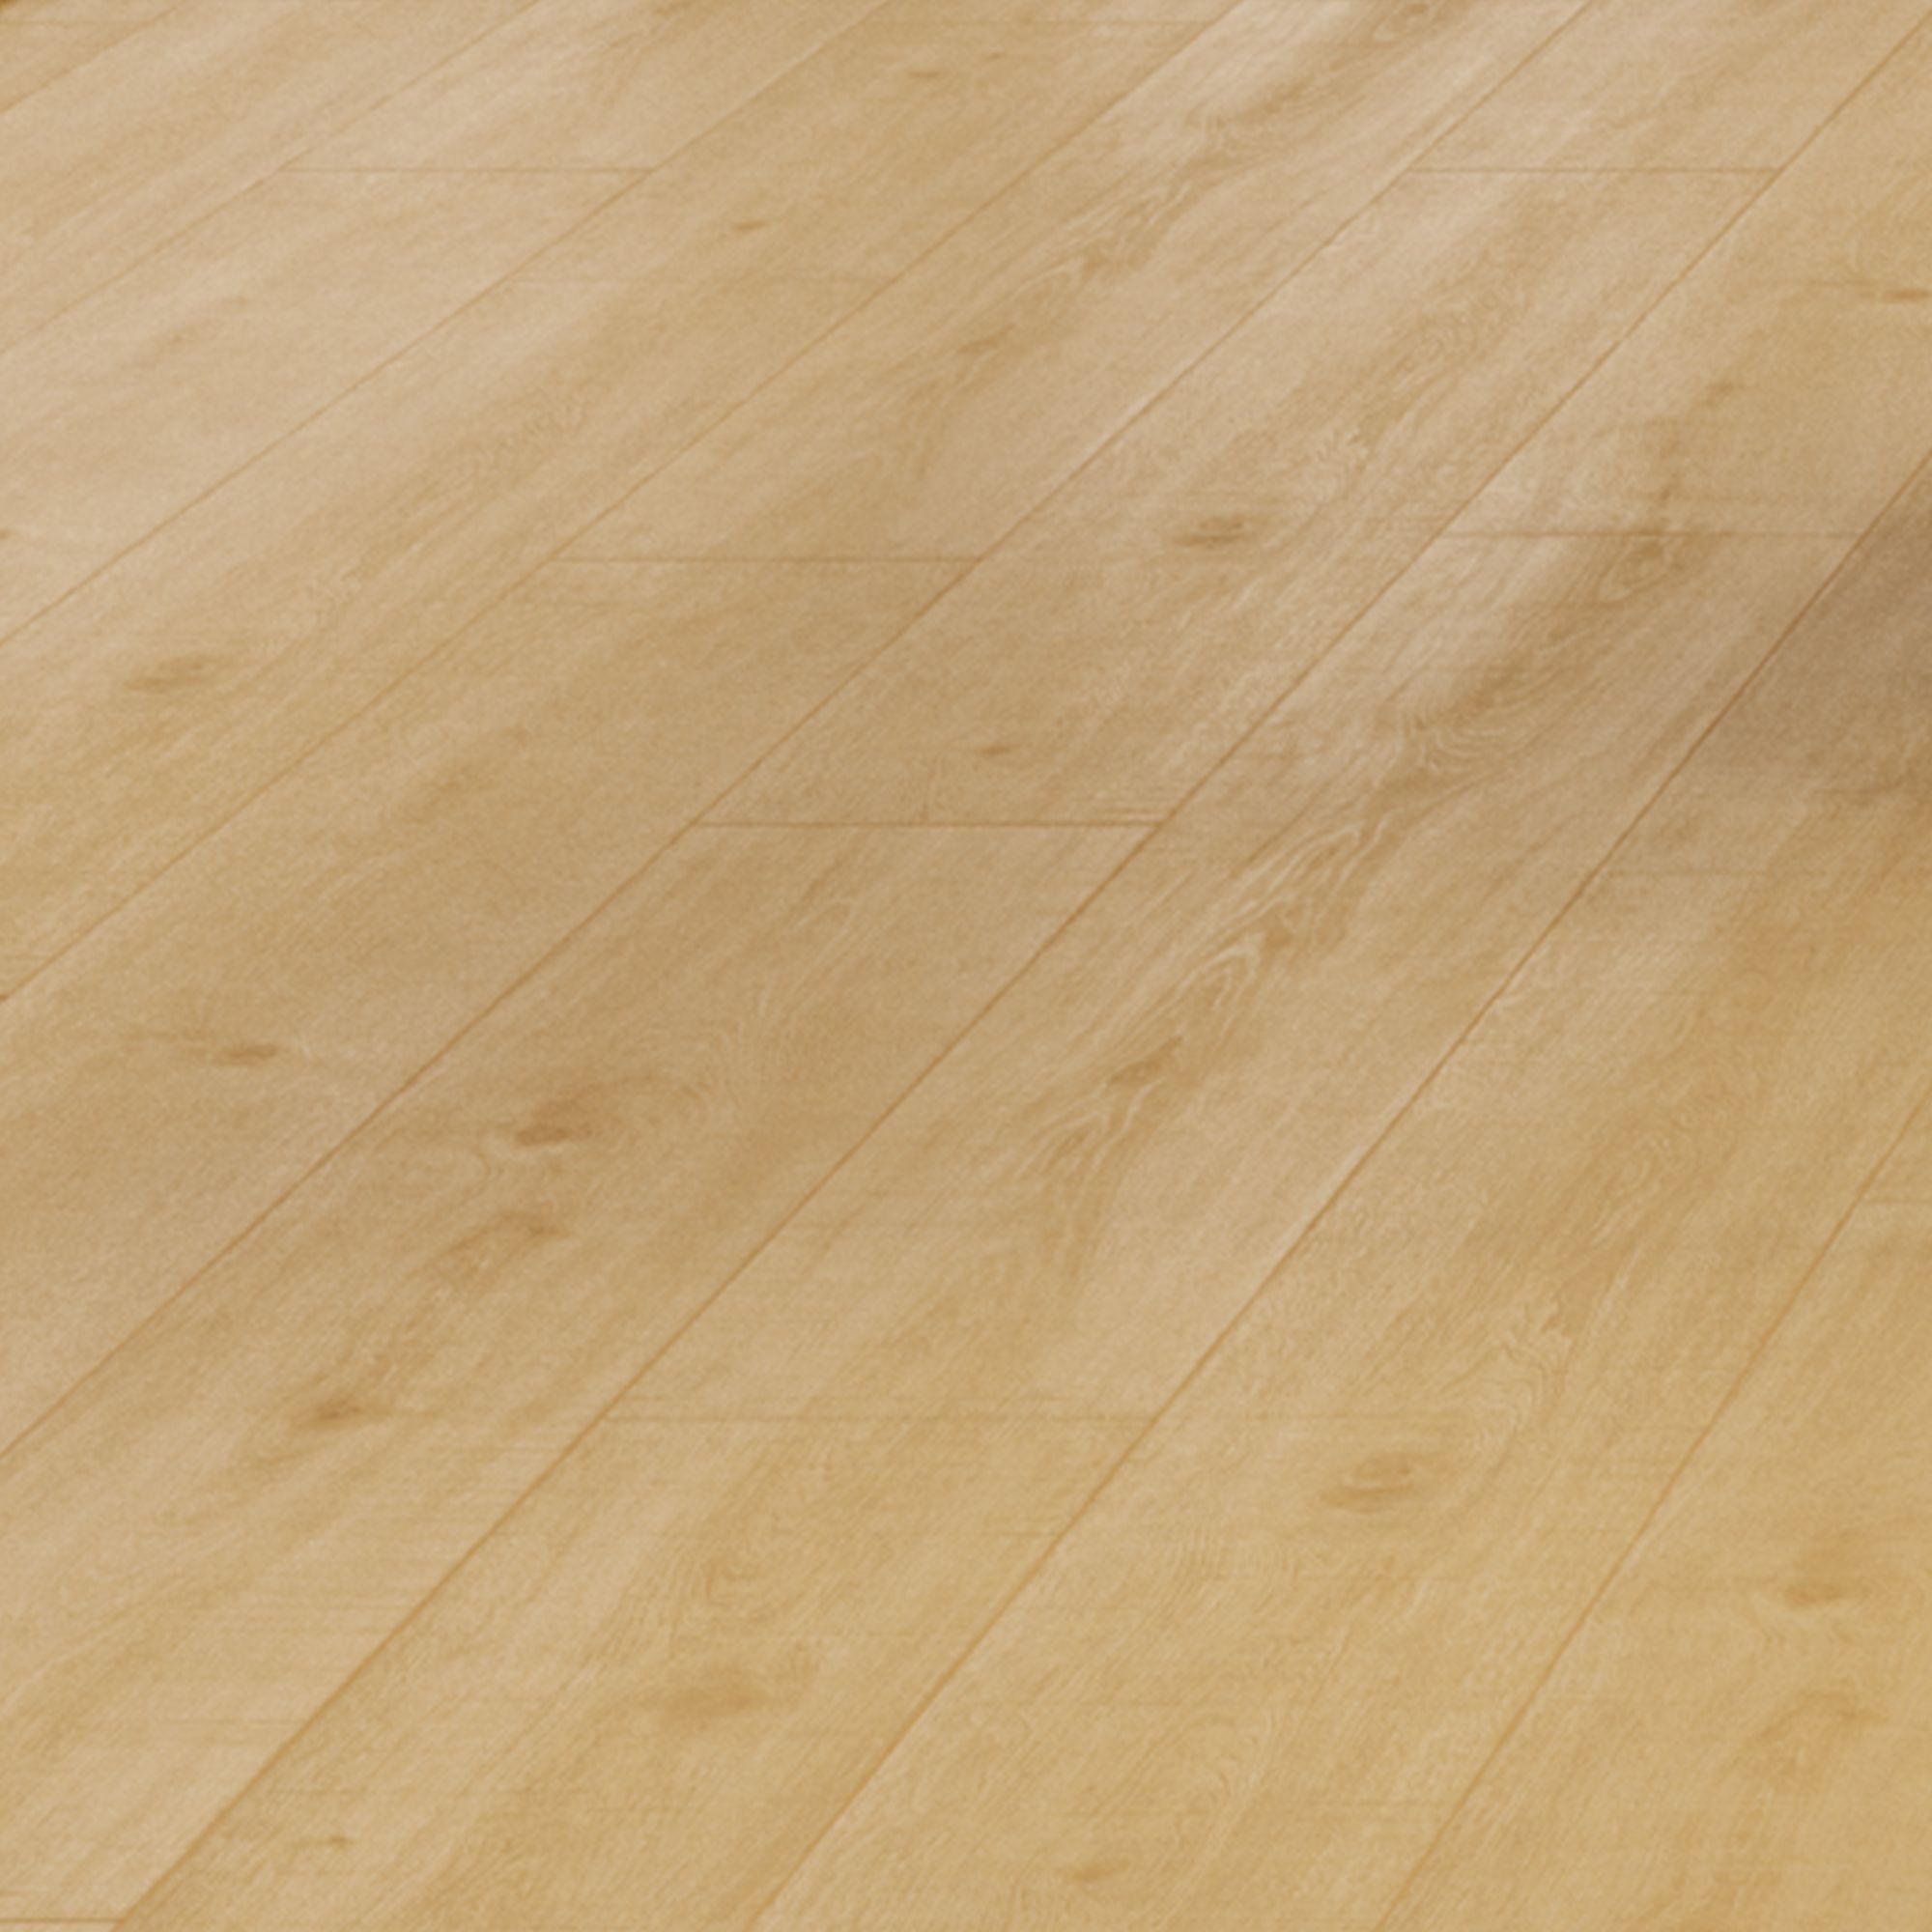 GoodHome Maldon Wood effect Laminate Flooring, 1.65m²